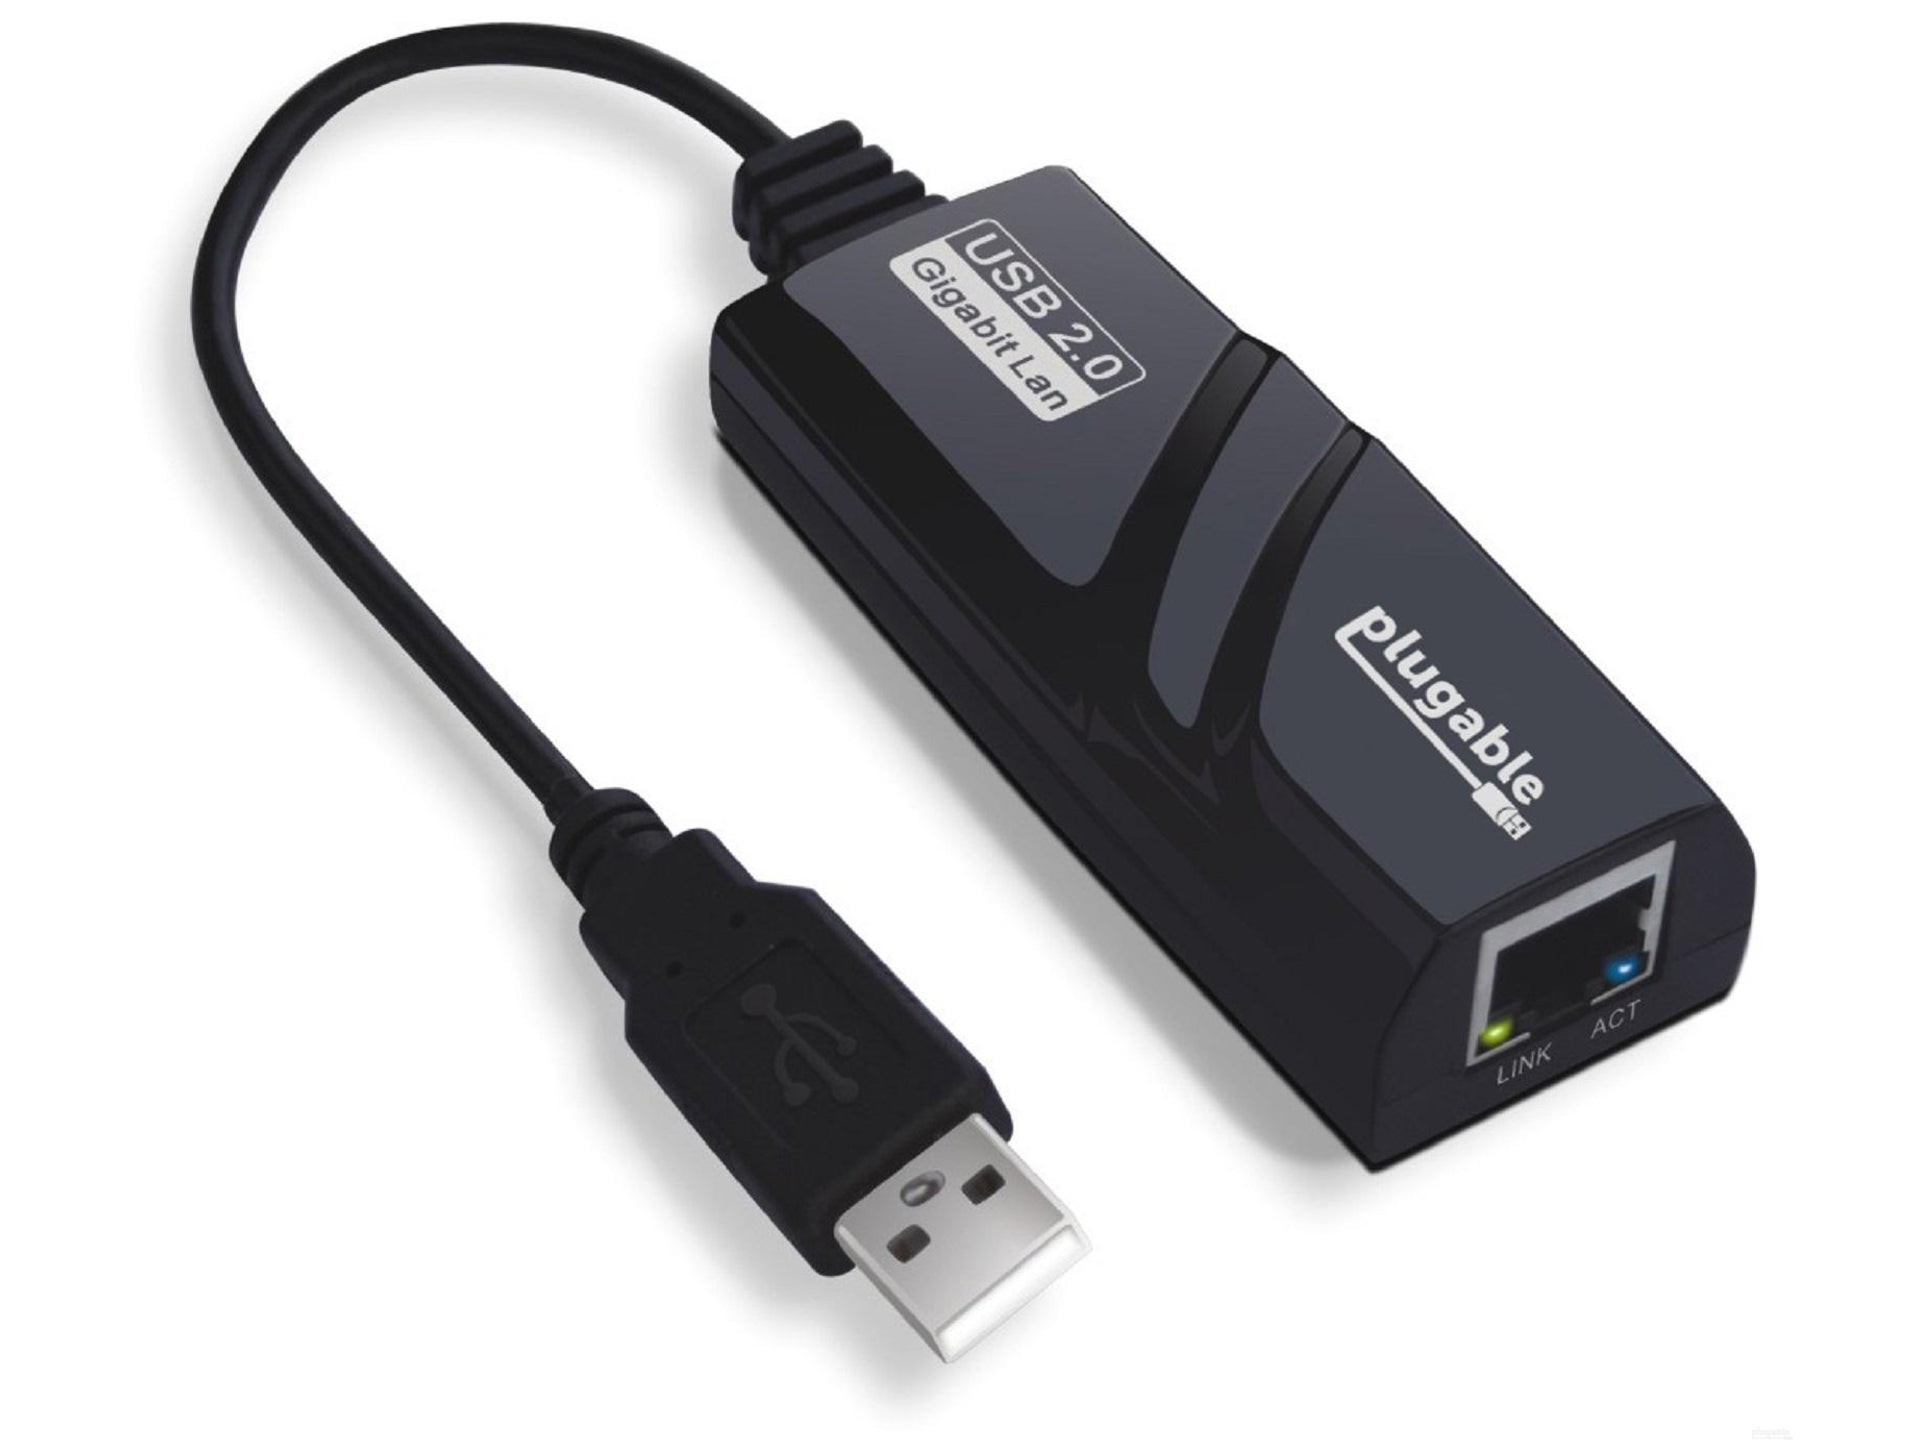 Plugable USB 2.0 10/100/1000 Ethernet Adapter – Plugable Technologies